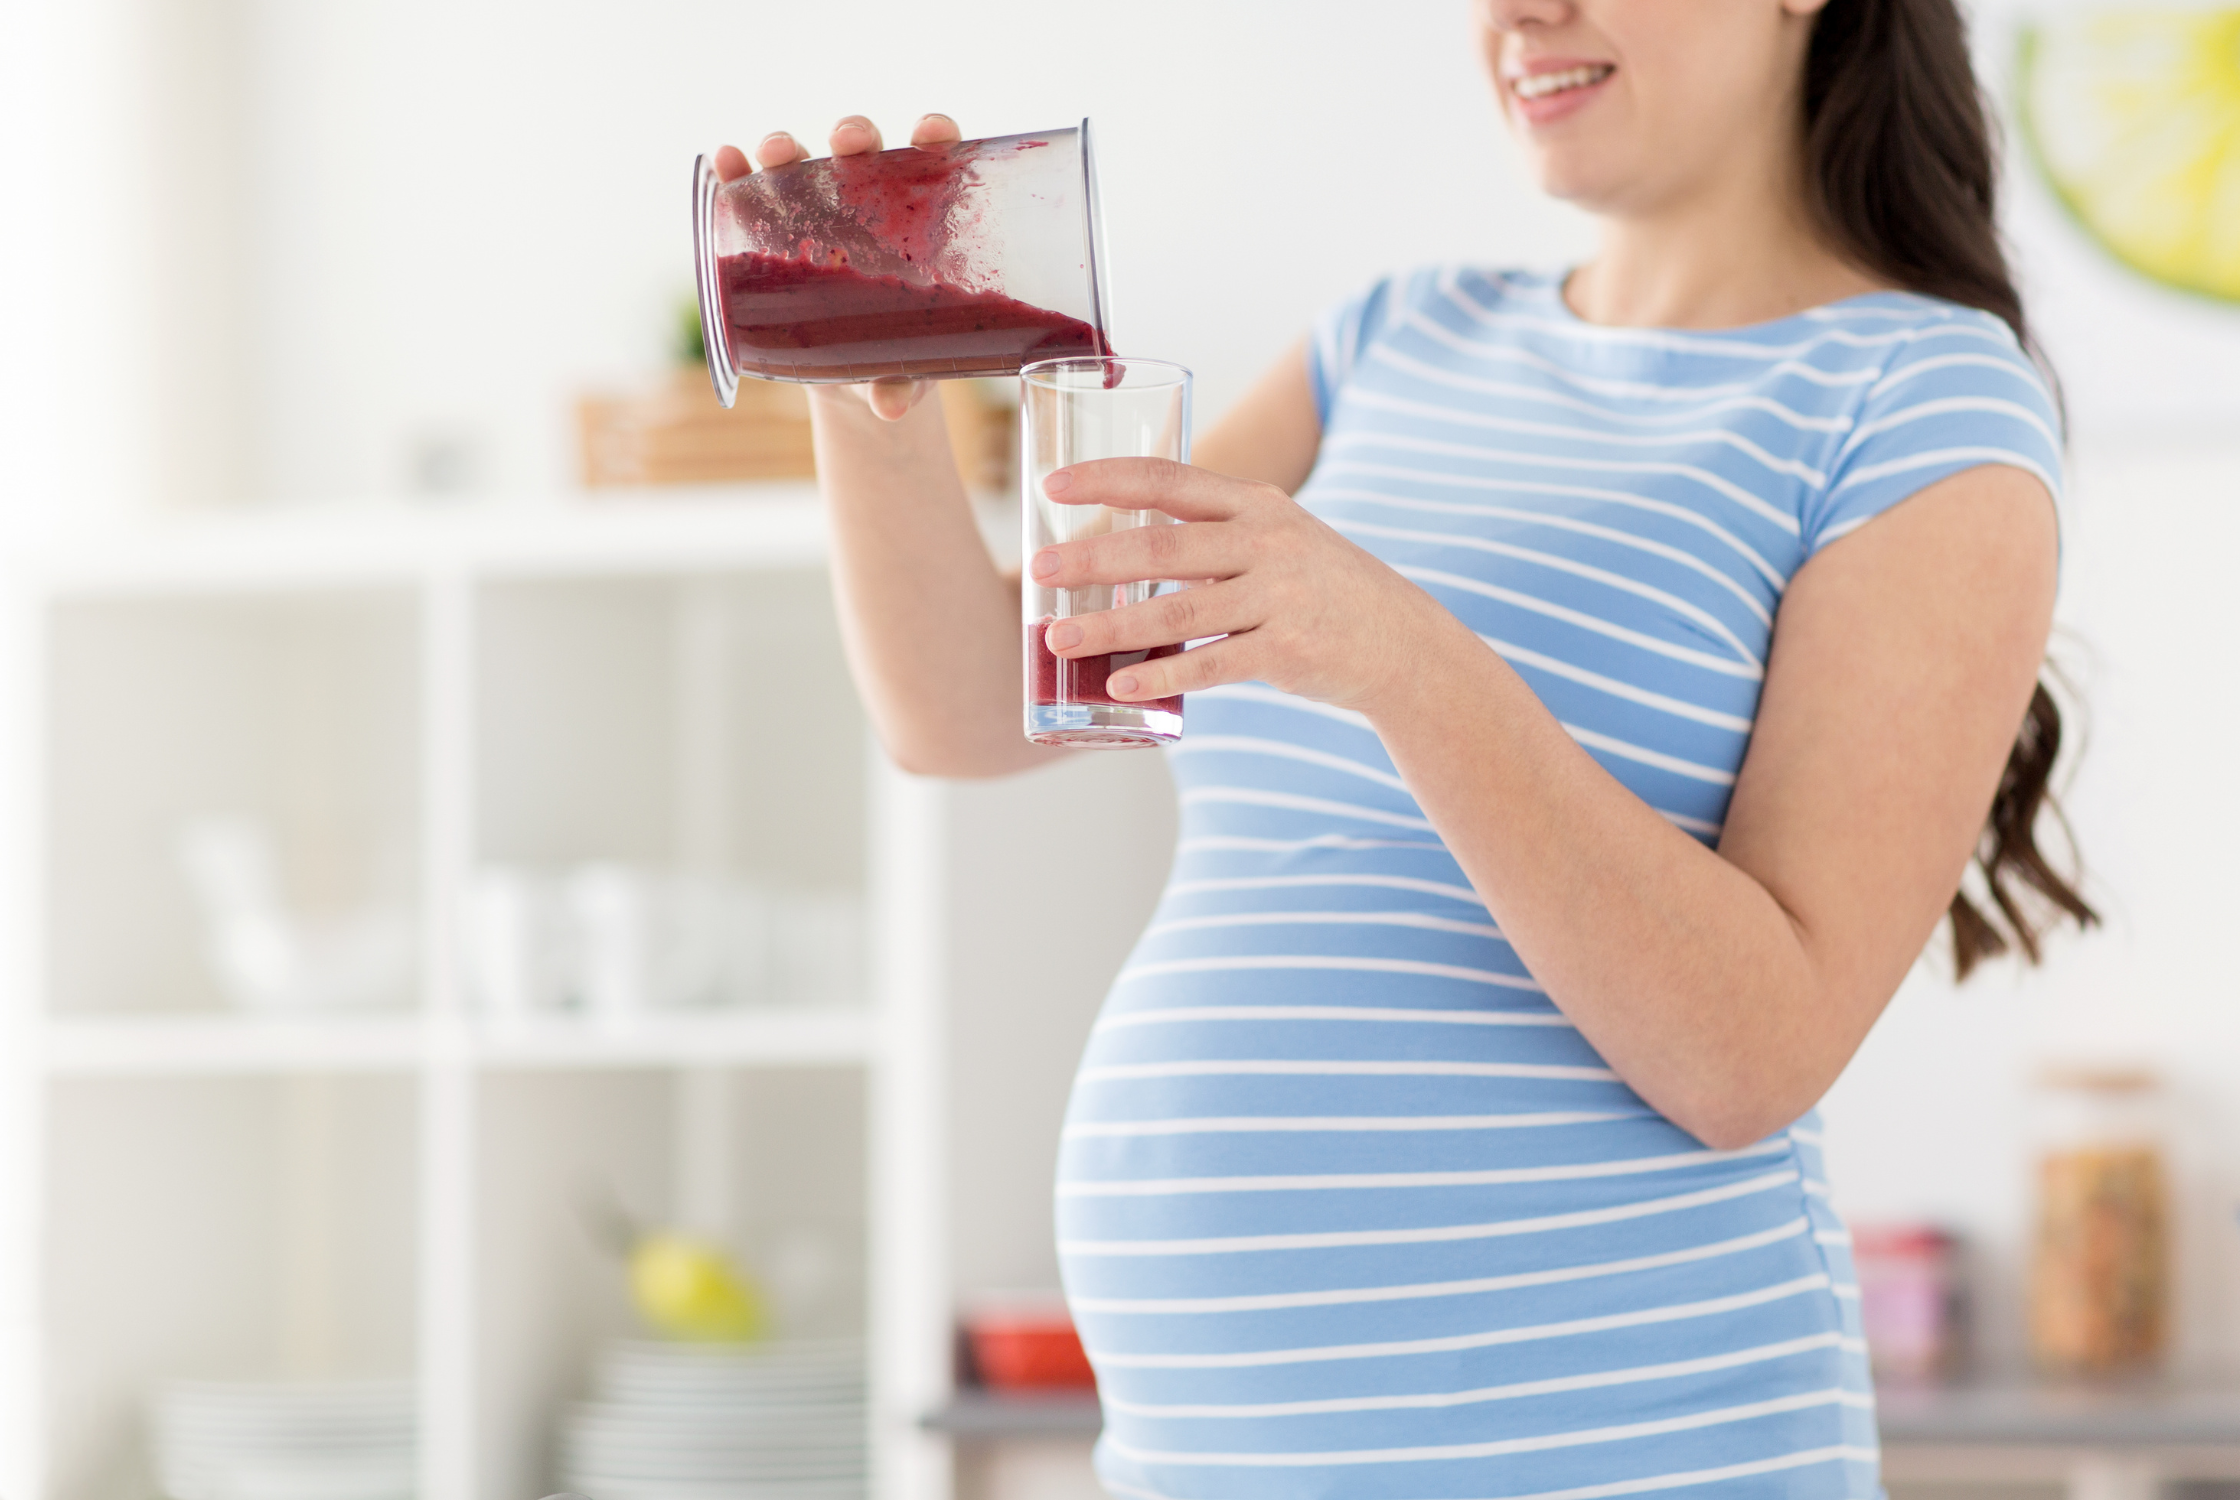 6+ Nourishing Pregnancy Smoothie Recipes